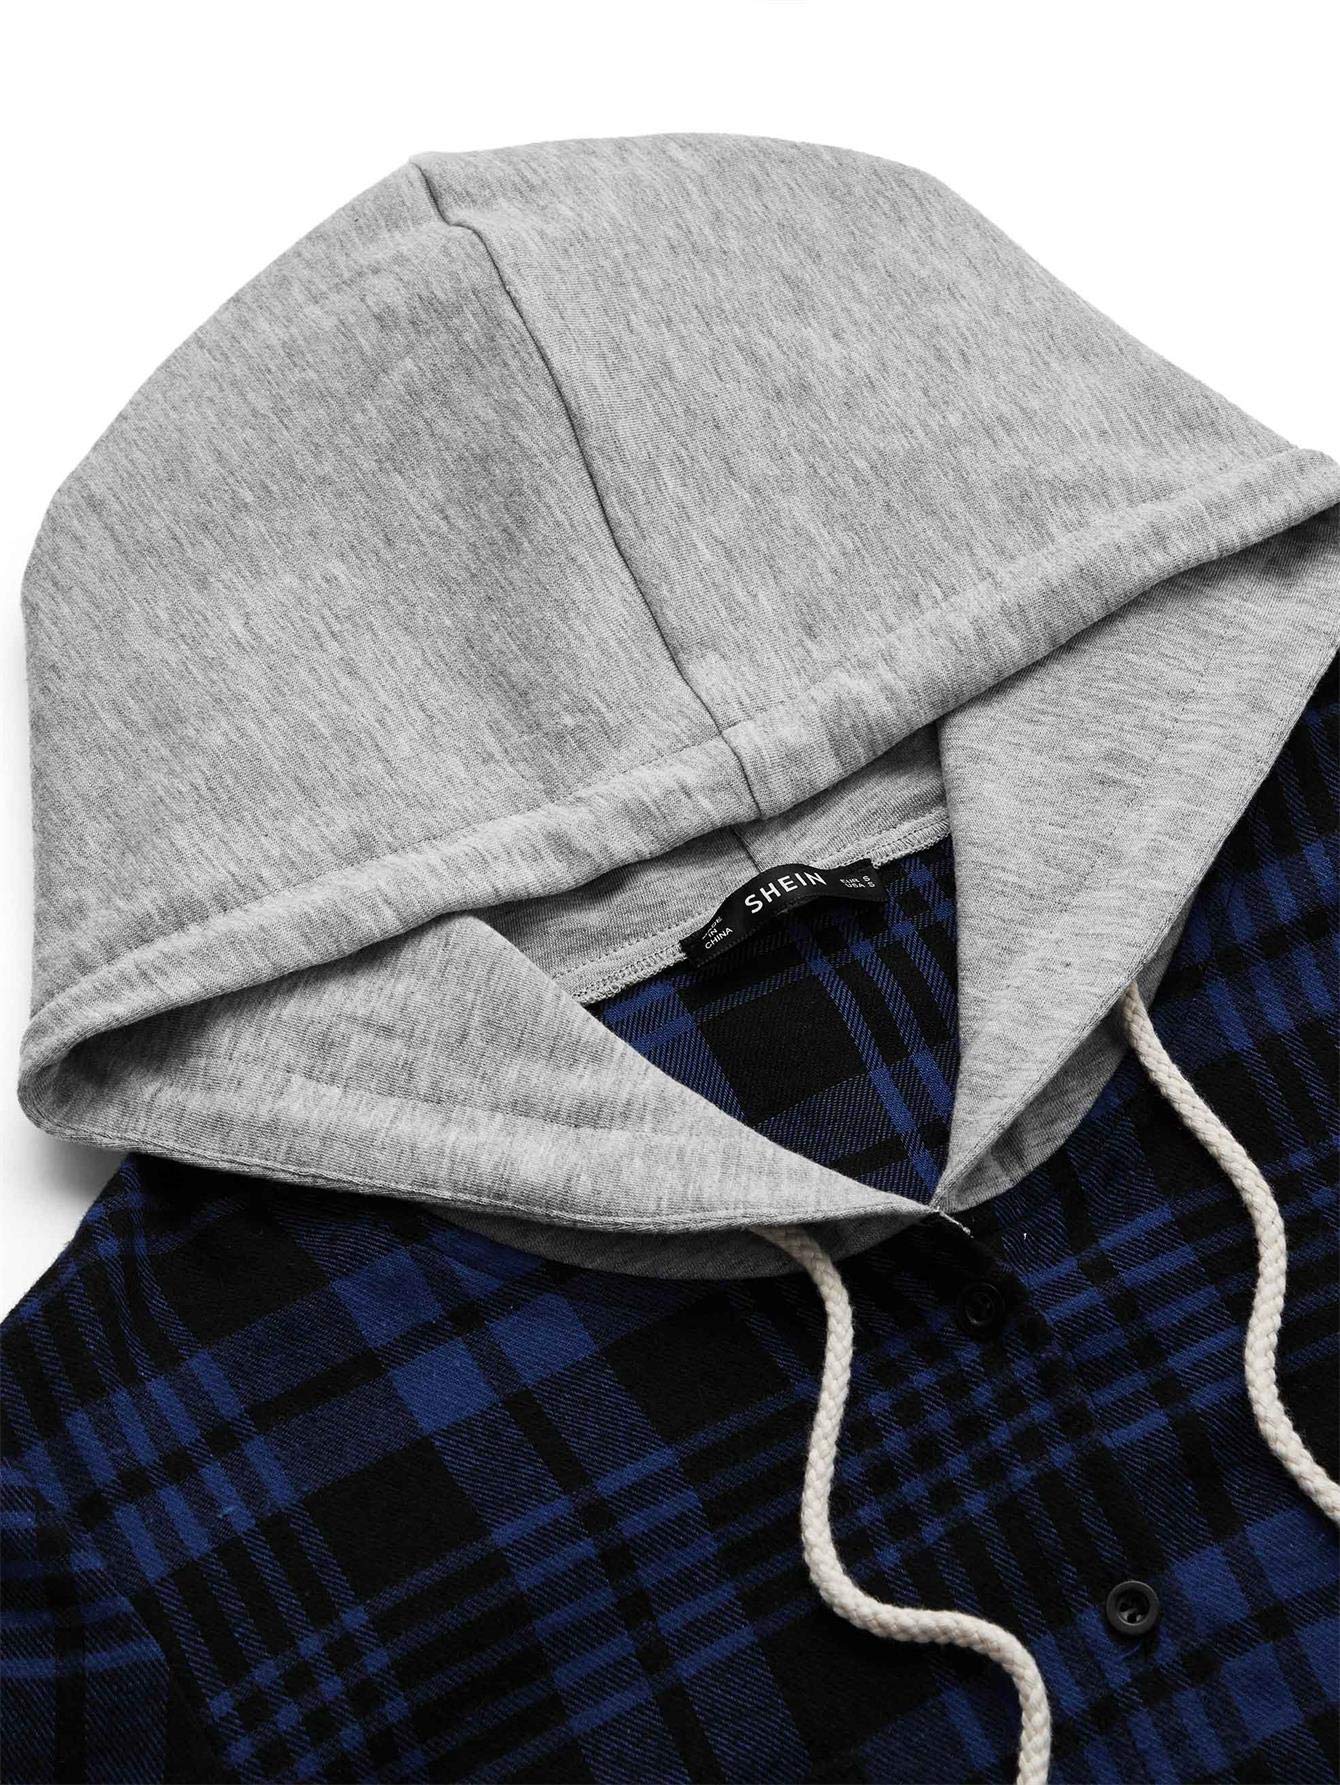 SweatyRocks Women's Casual Plaid Hoodie Shirt Long Sleeve Button-up Blouse Tops (Medium, Navy)